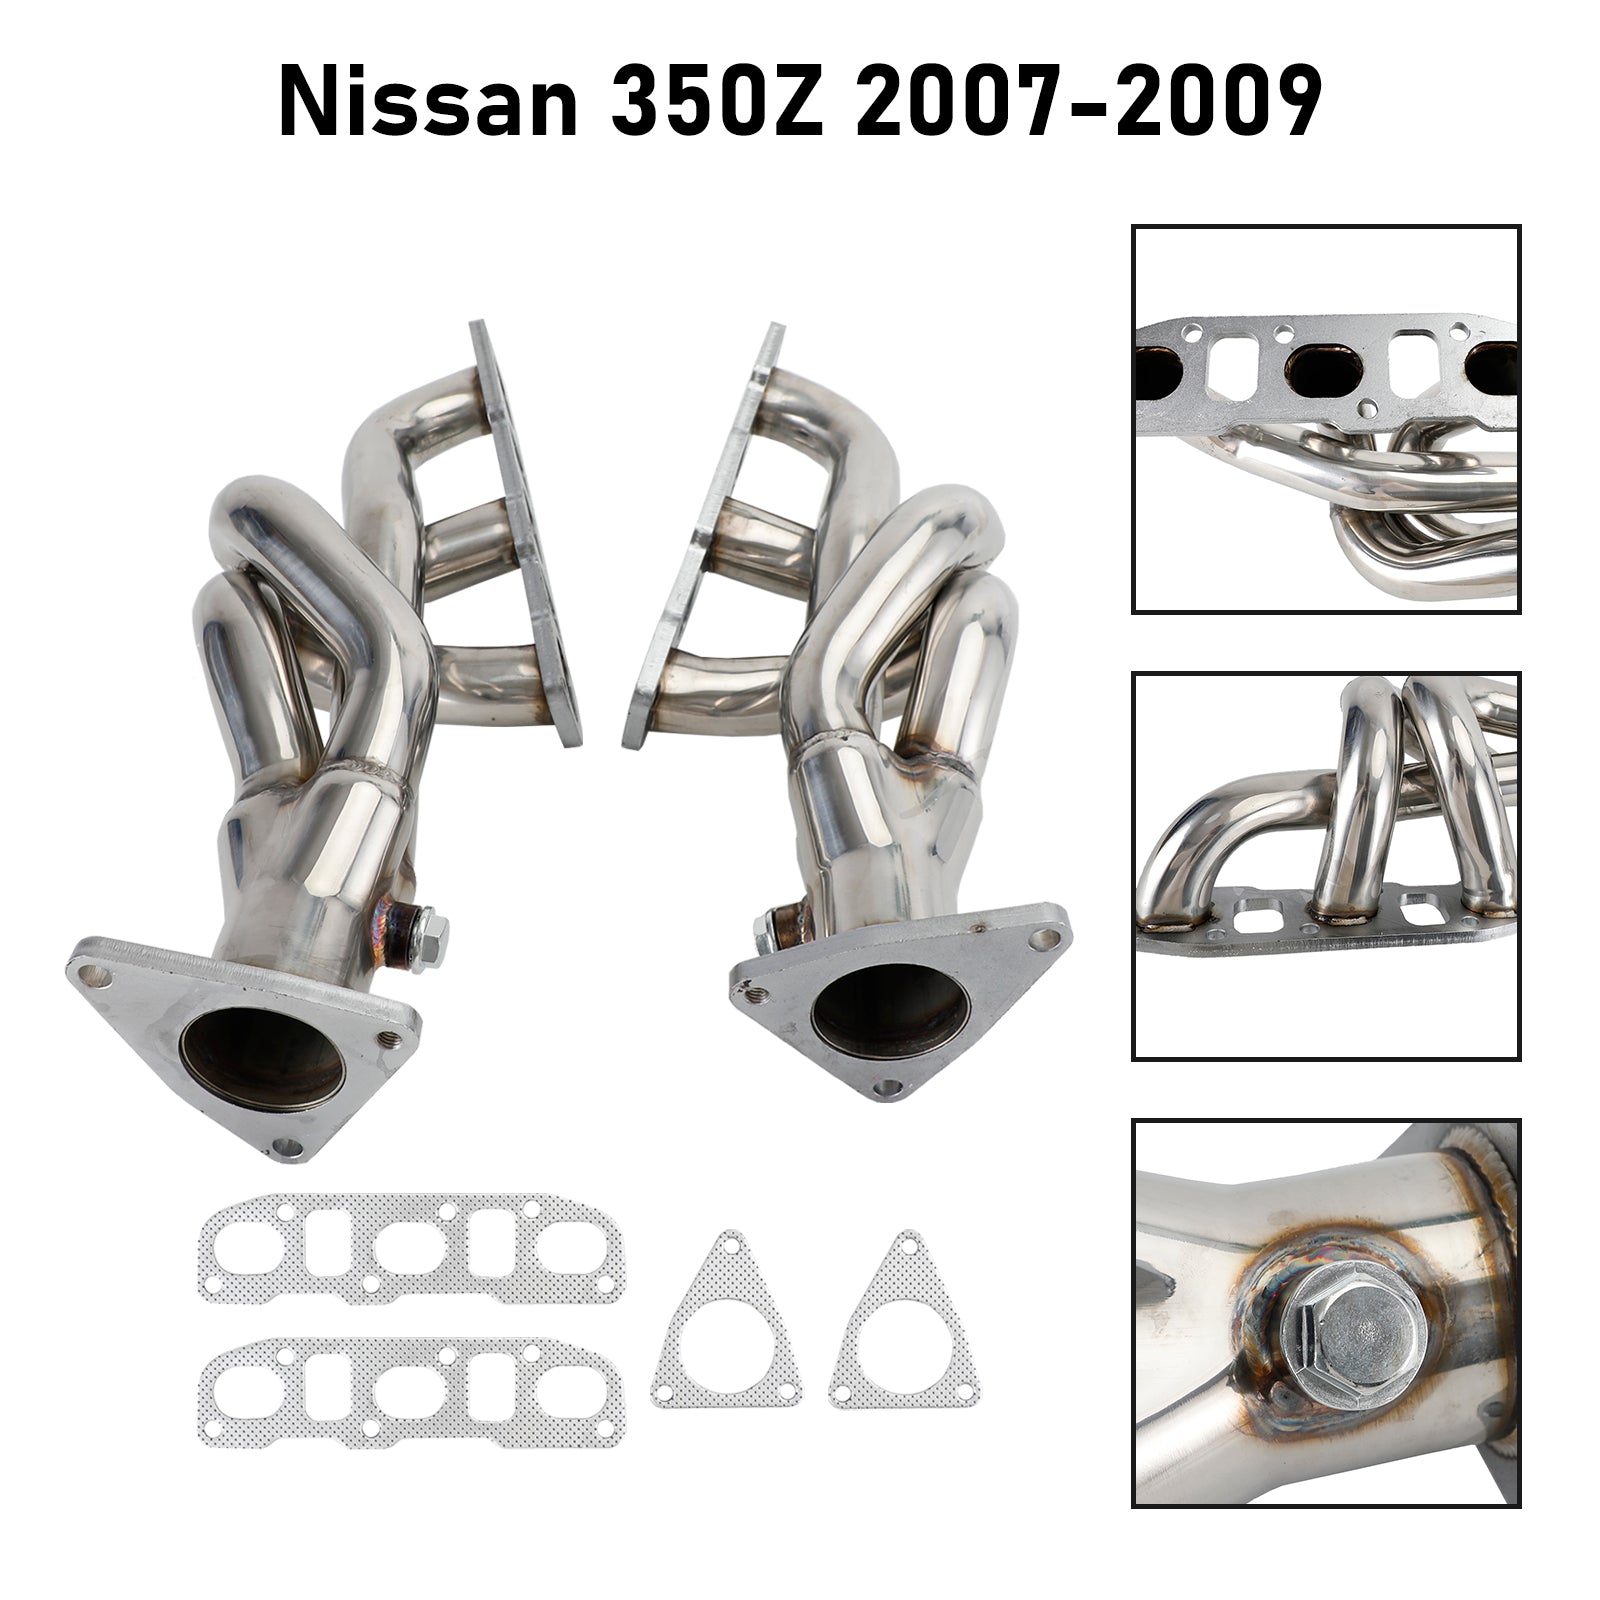 Nissan 350Z 370Z Infiniti G37 Stainless Steel Exhaust Header Manifold